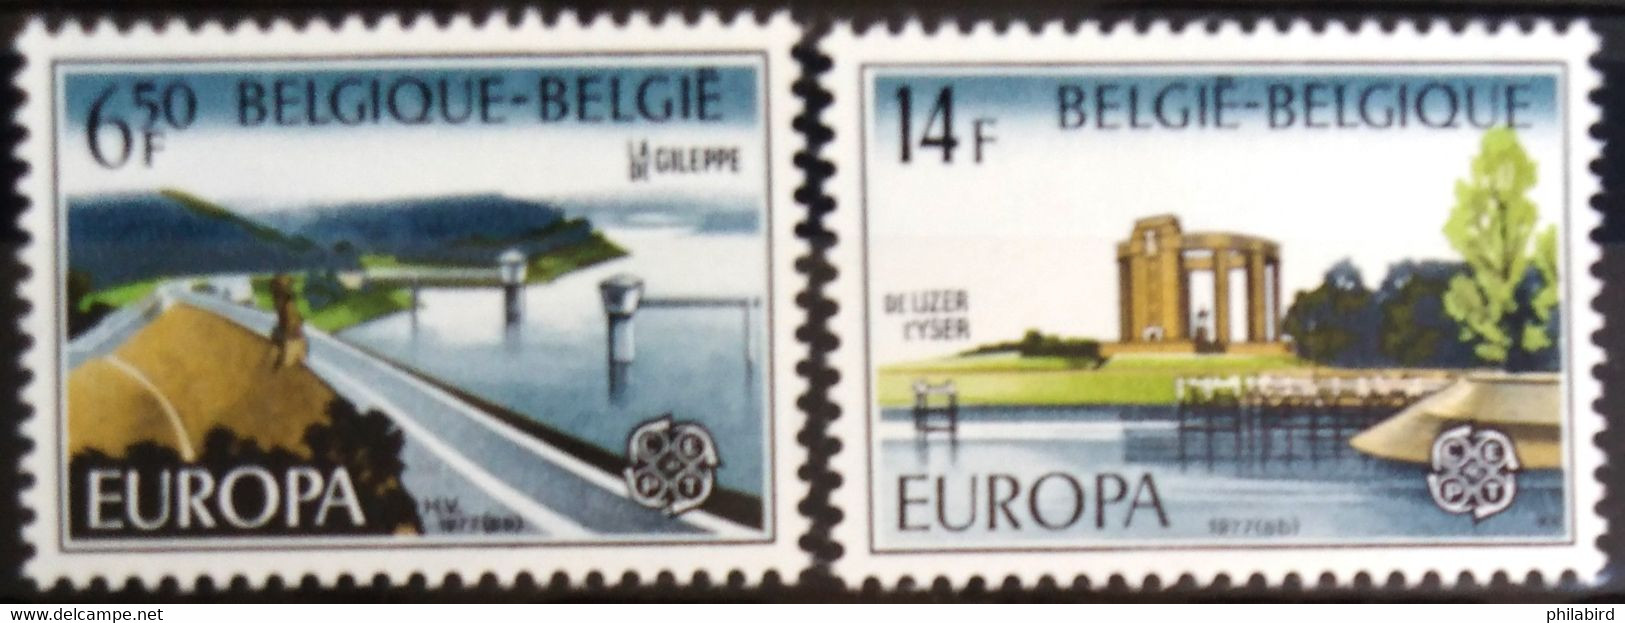 EUROPA 1977 - BELGIQUE                    N° 1848/1849                        NEUF** - 1977